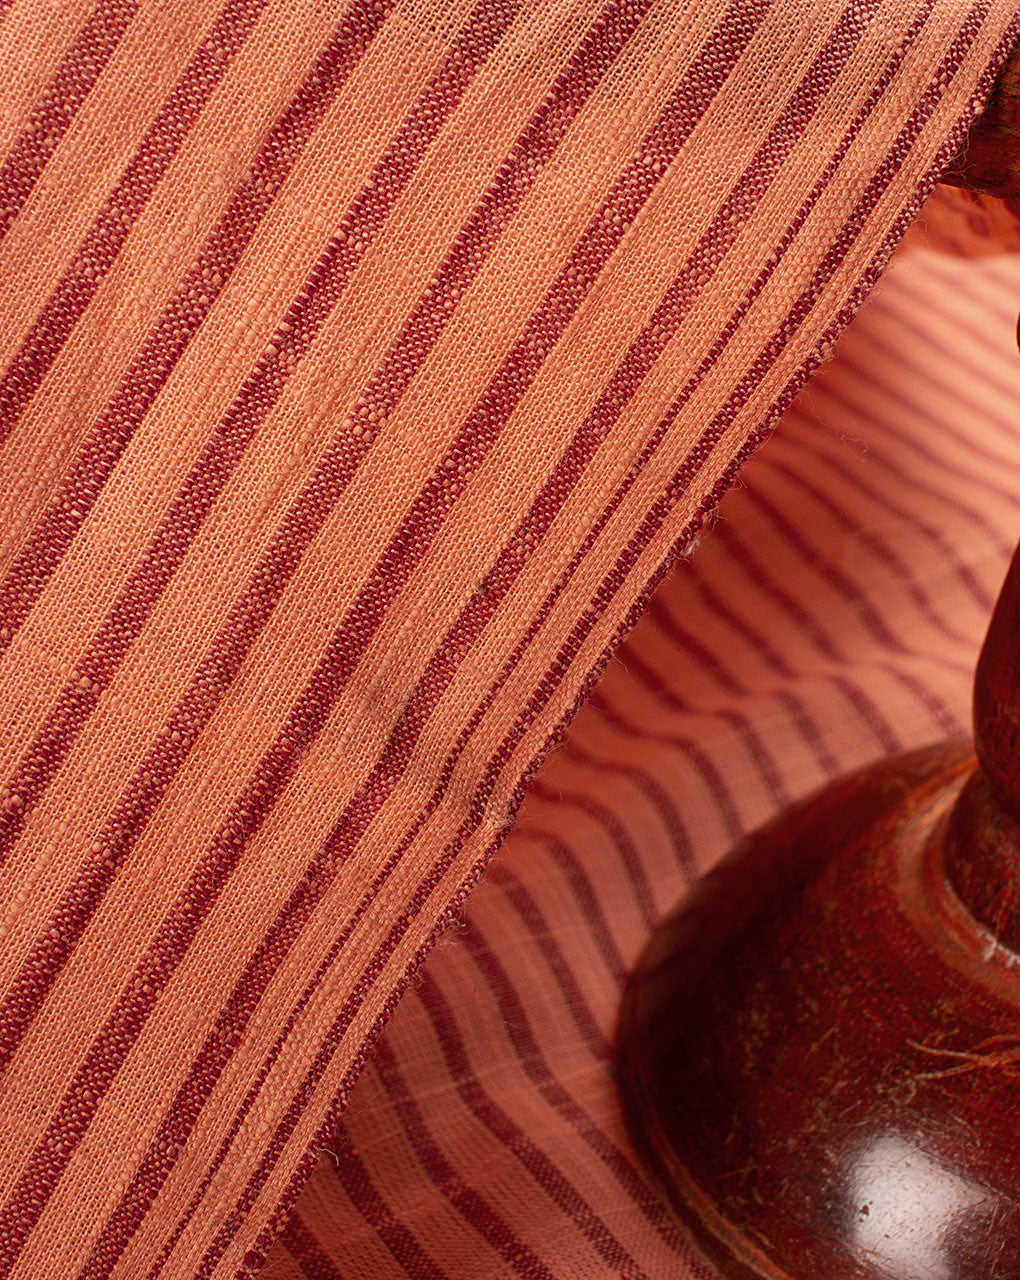 Woven Loom Textured Cotton Fabric - Fabriclore.com